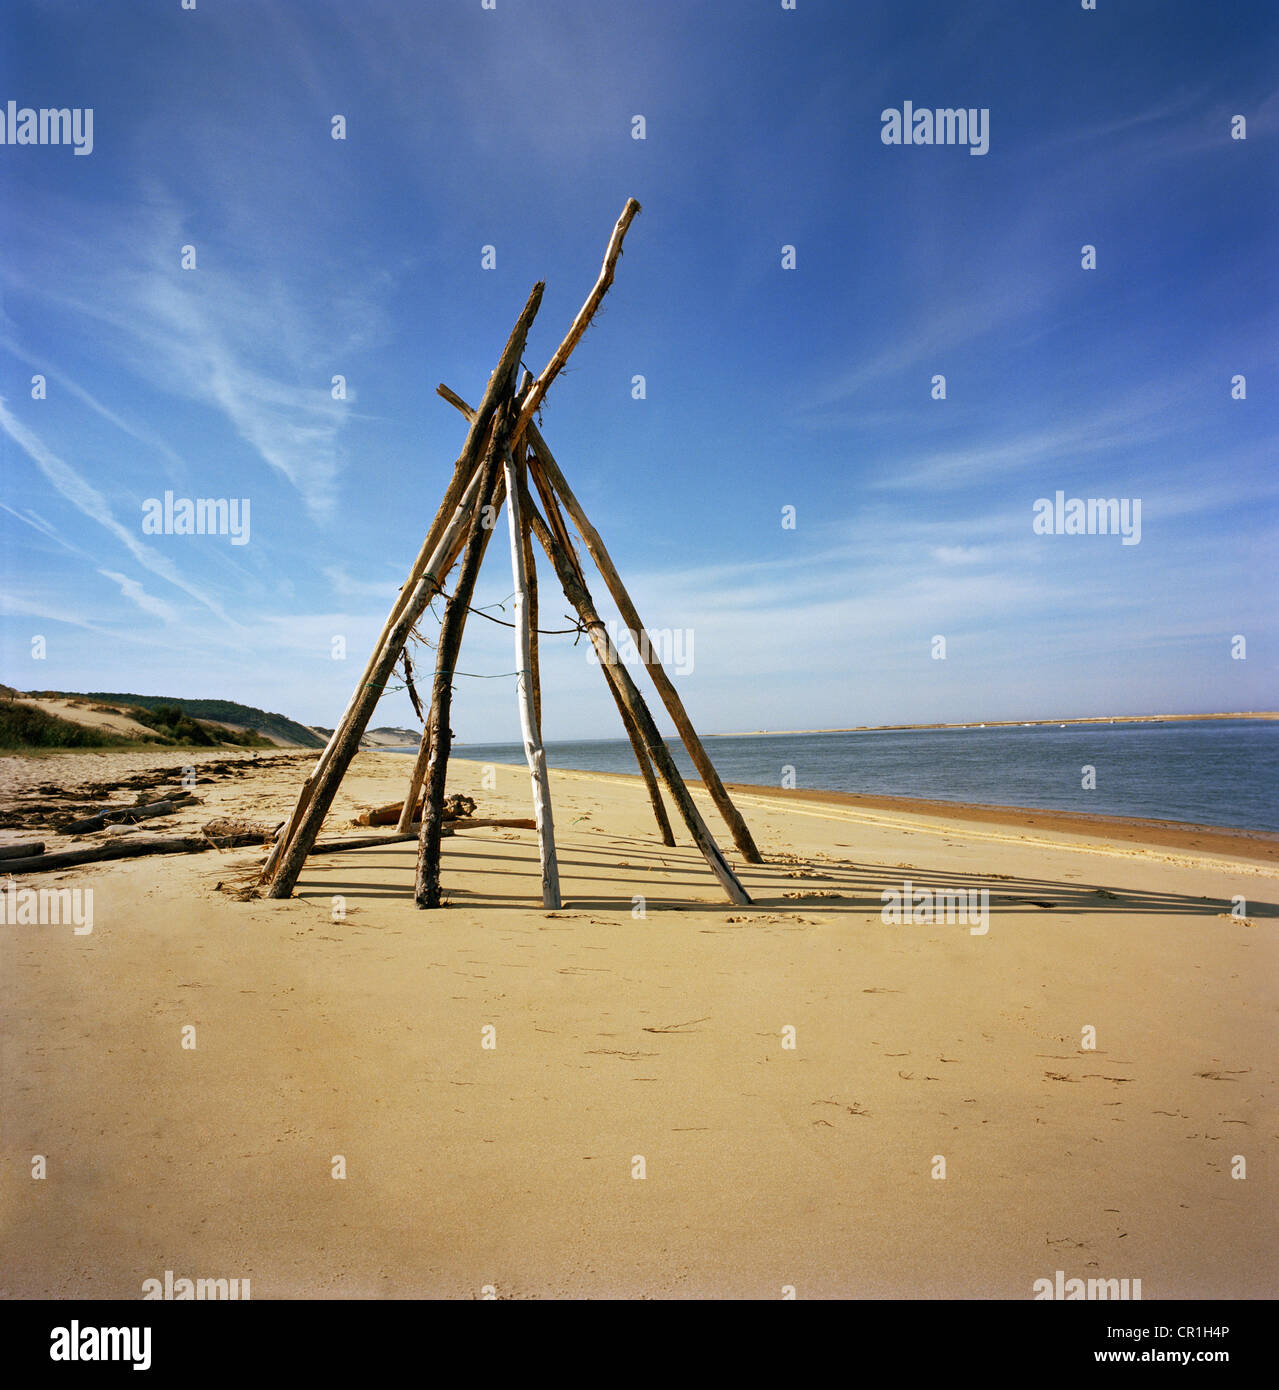 Teepee log sulla spiaggia sabbiosa Foto Stock